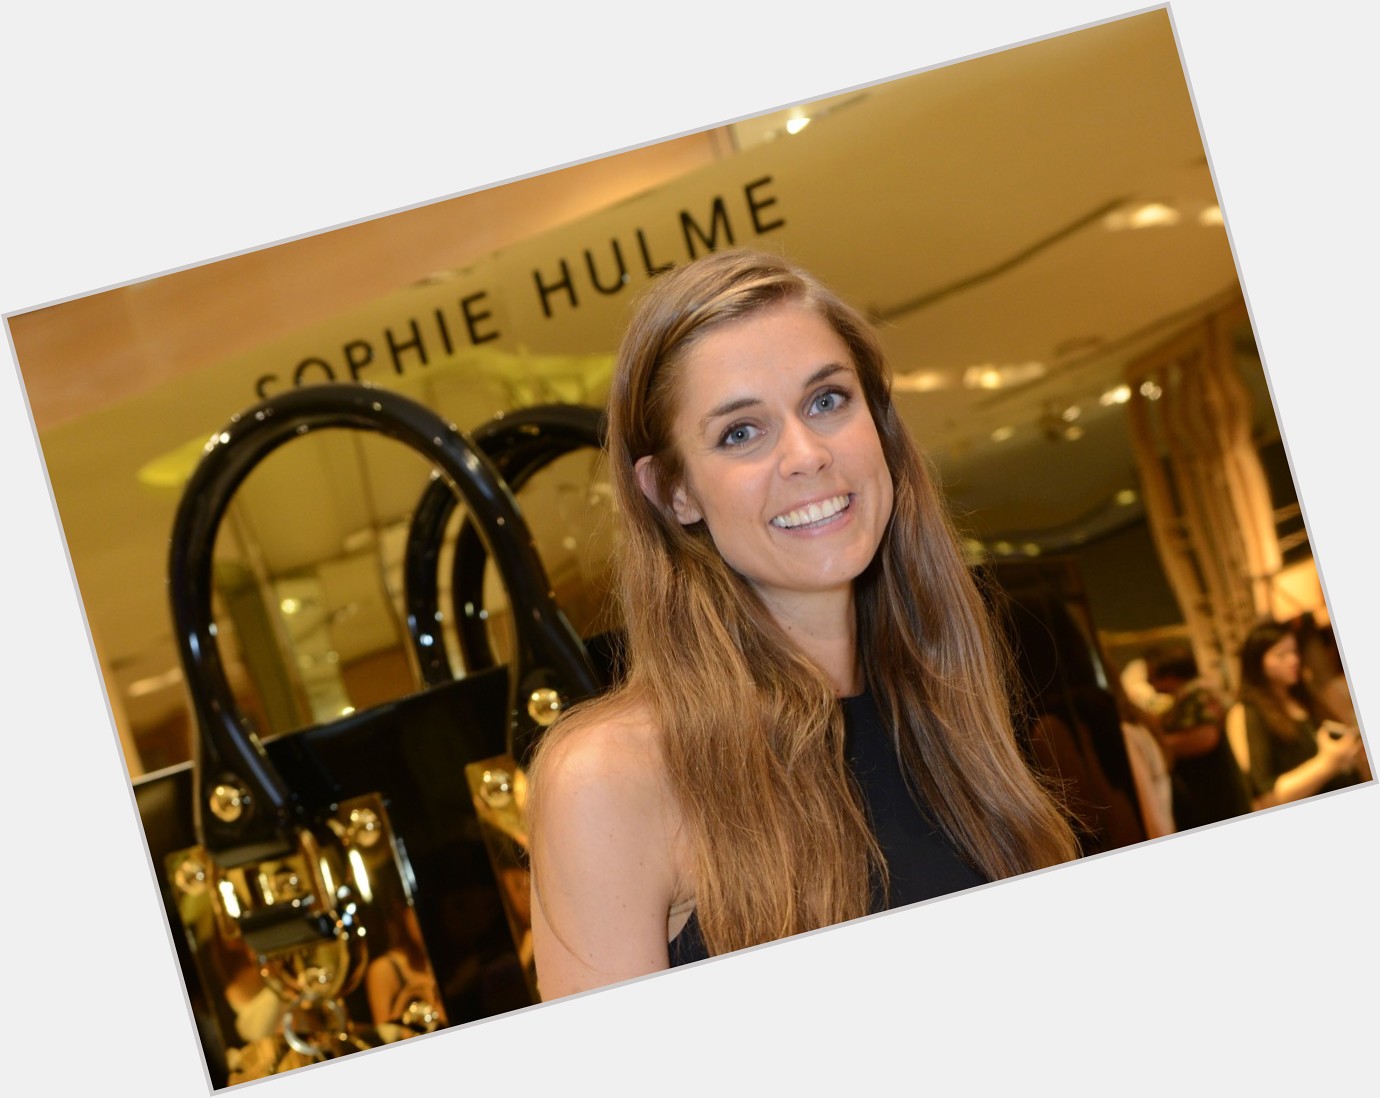 Sophie Hulme new pic 1